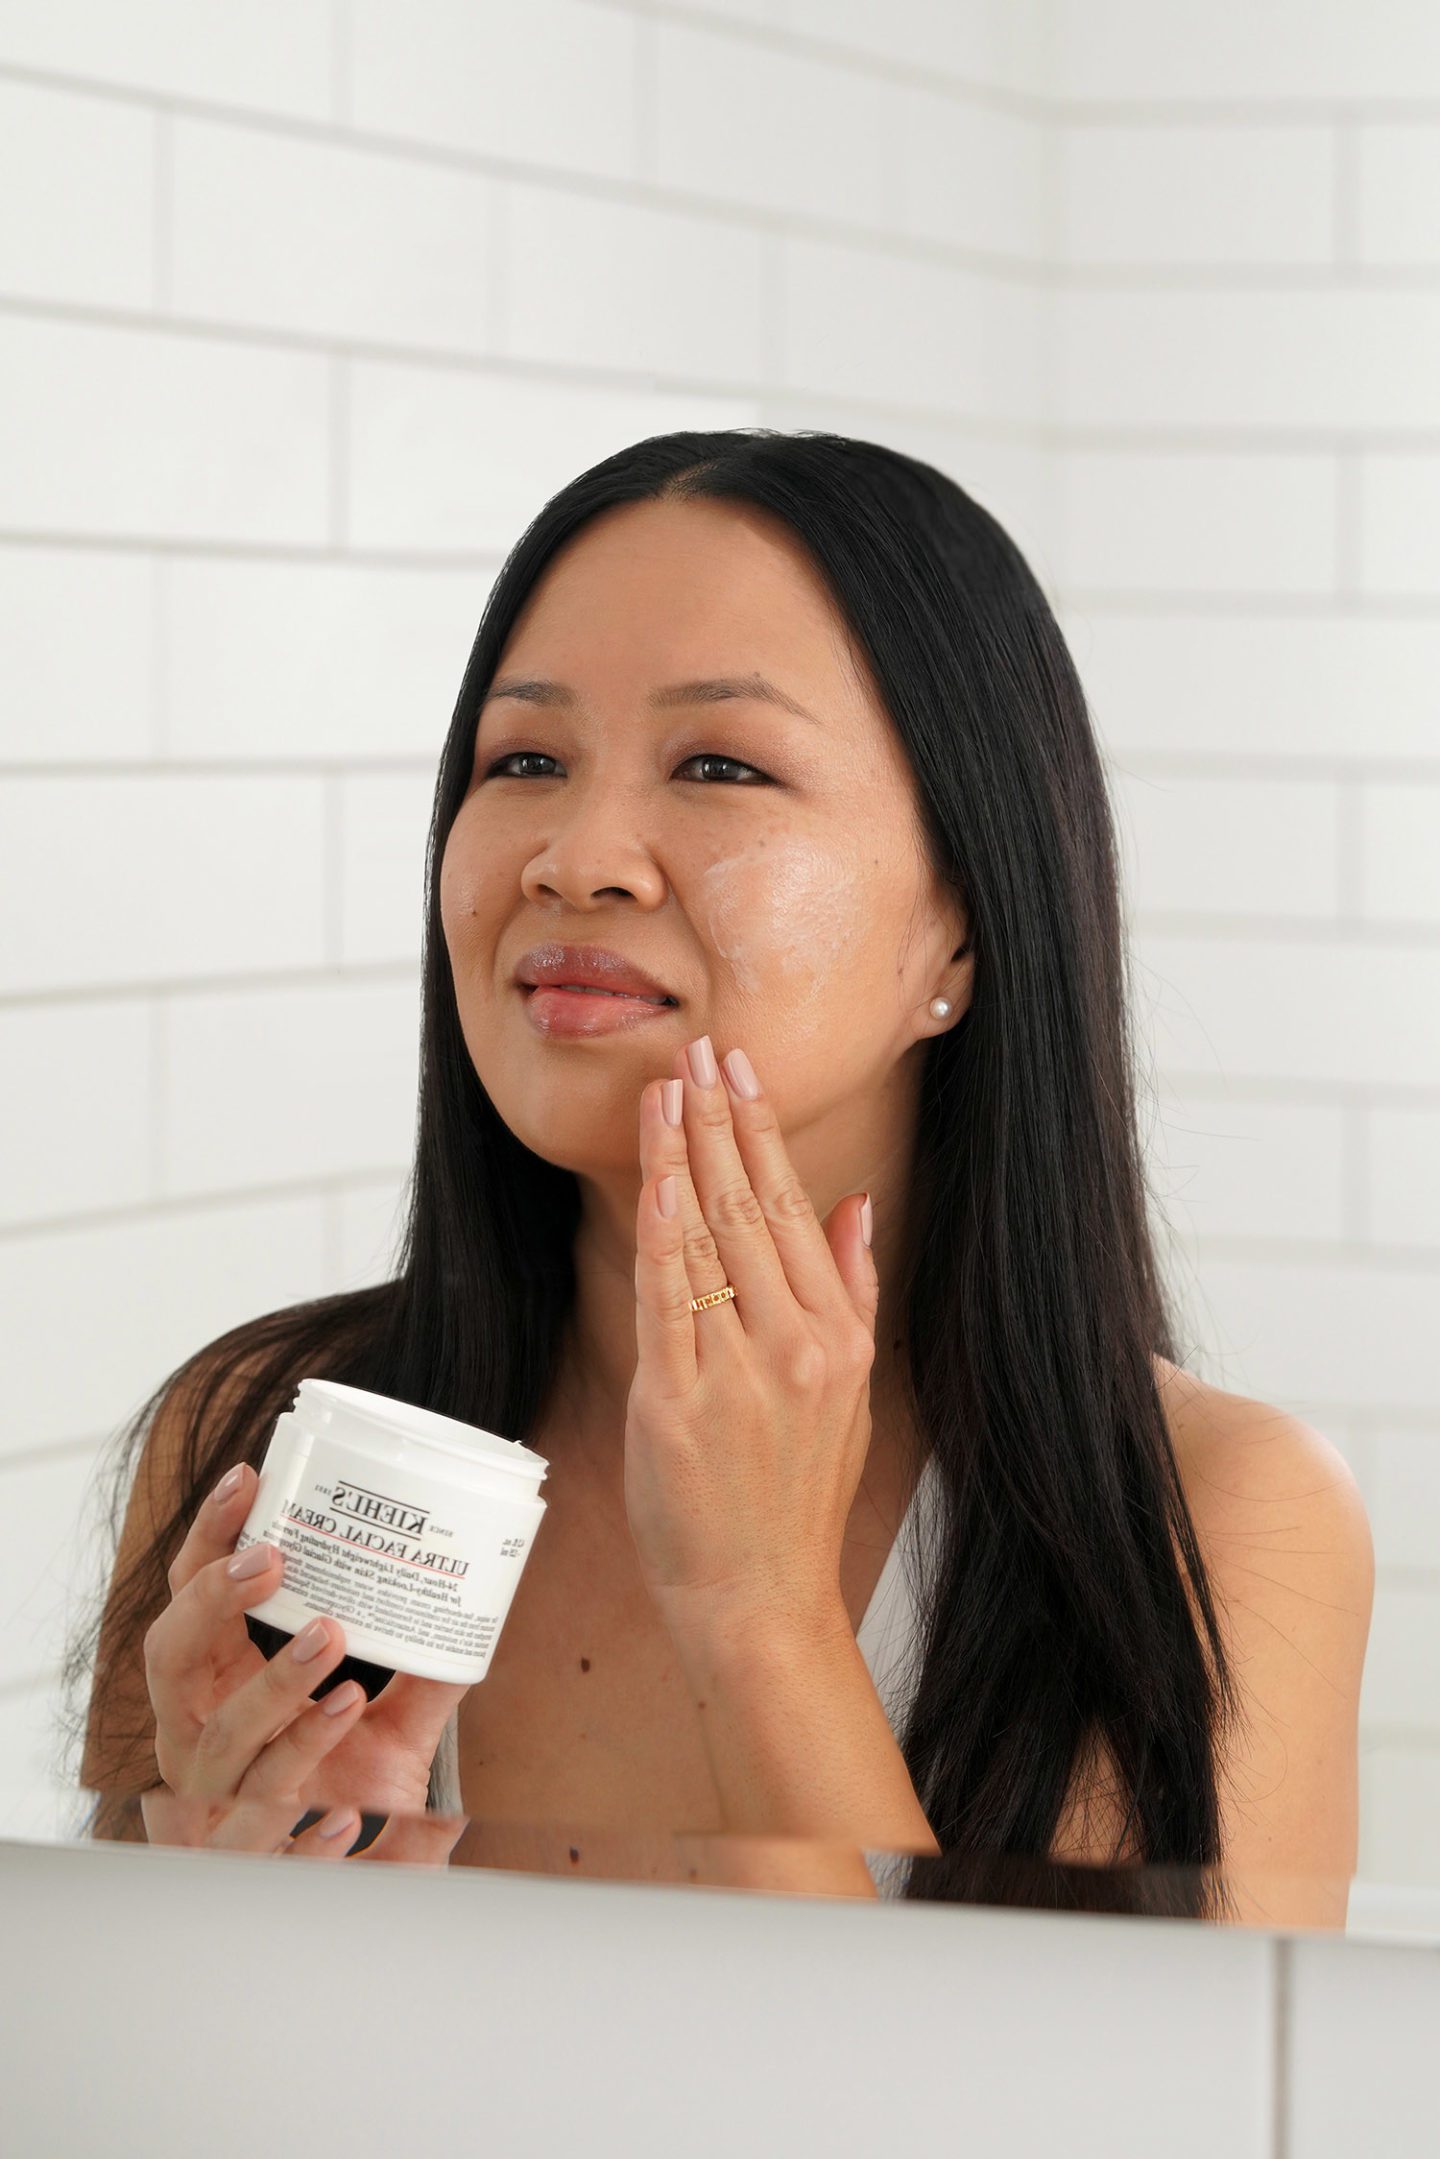 Kiehl's Ultra Facial Cream Review